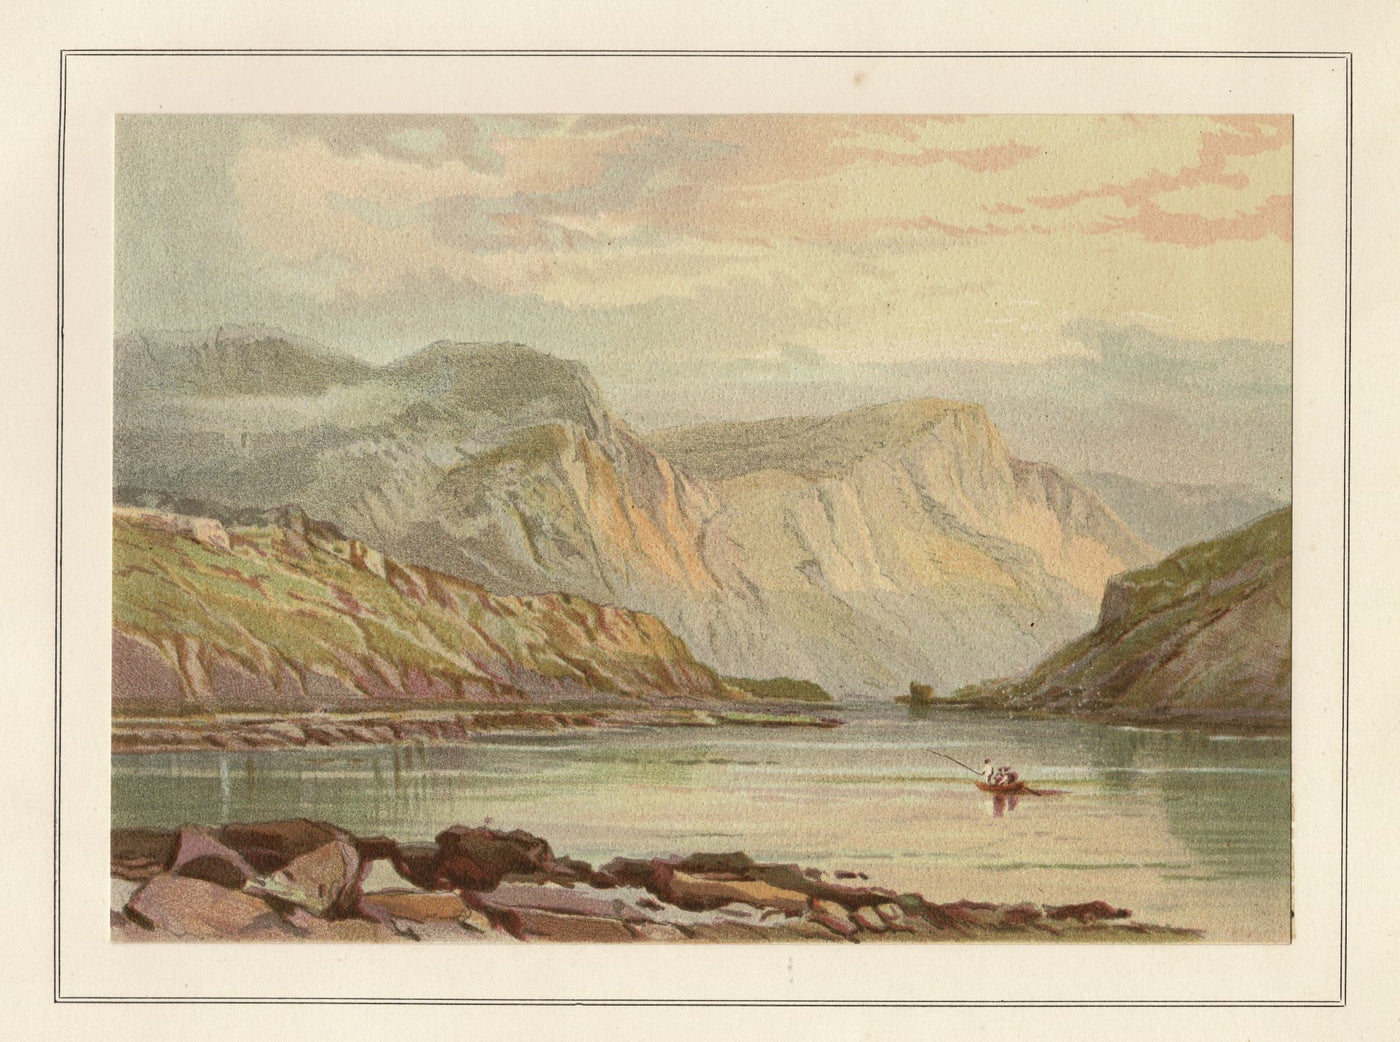 Llyn Ogwen Snowdonia Wales antique print 1879